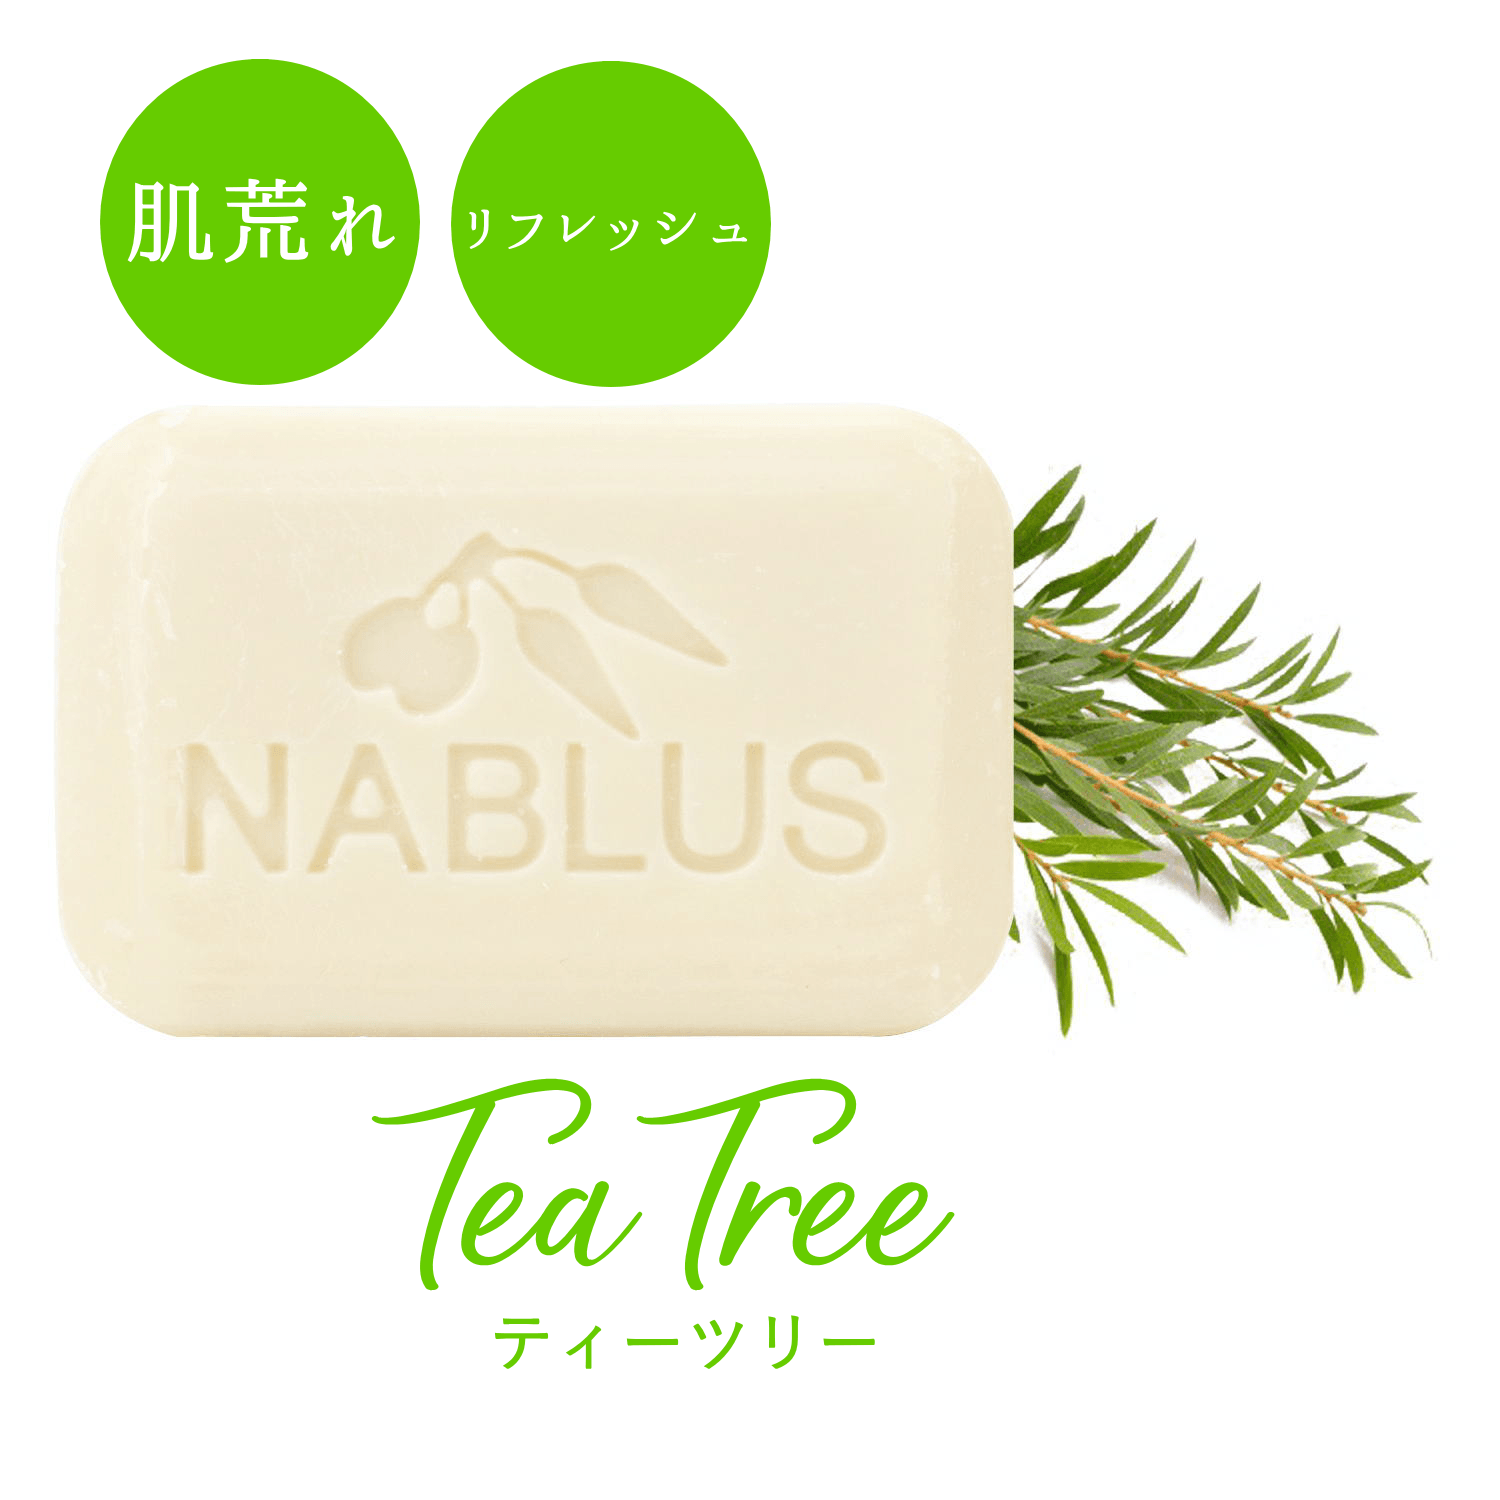 NABLUS SOAP ナーブルスソープ 無添加 完全オーガニック石鹸（ティーツリー）肌荒れ・リフレッシュ 100g - YOUR ORGANICS